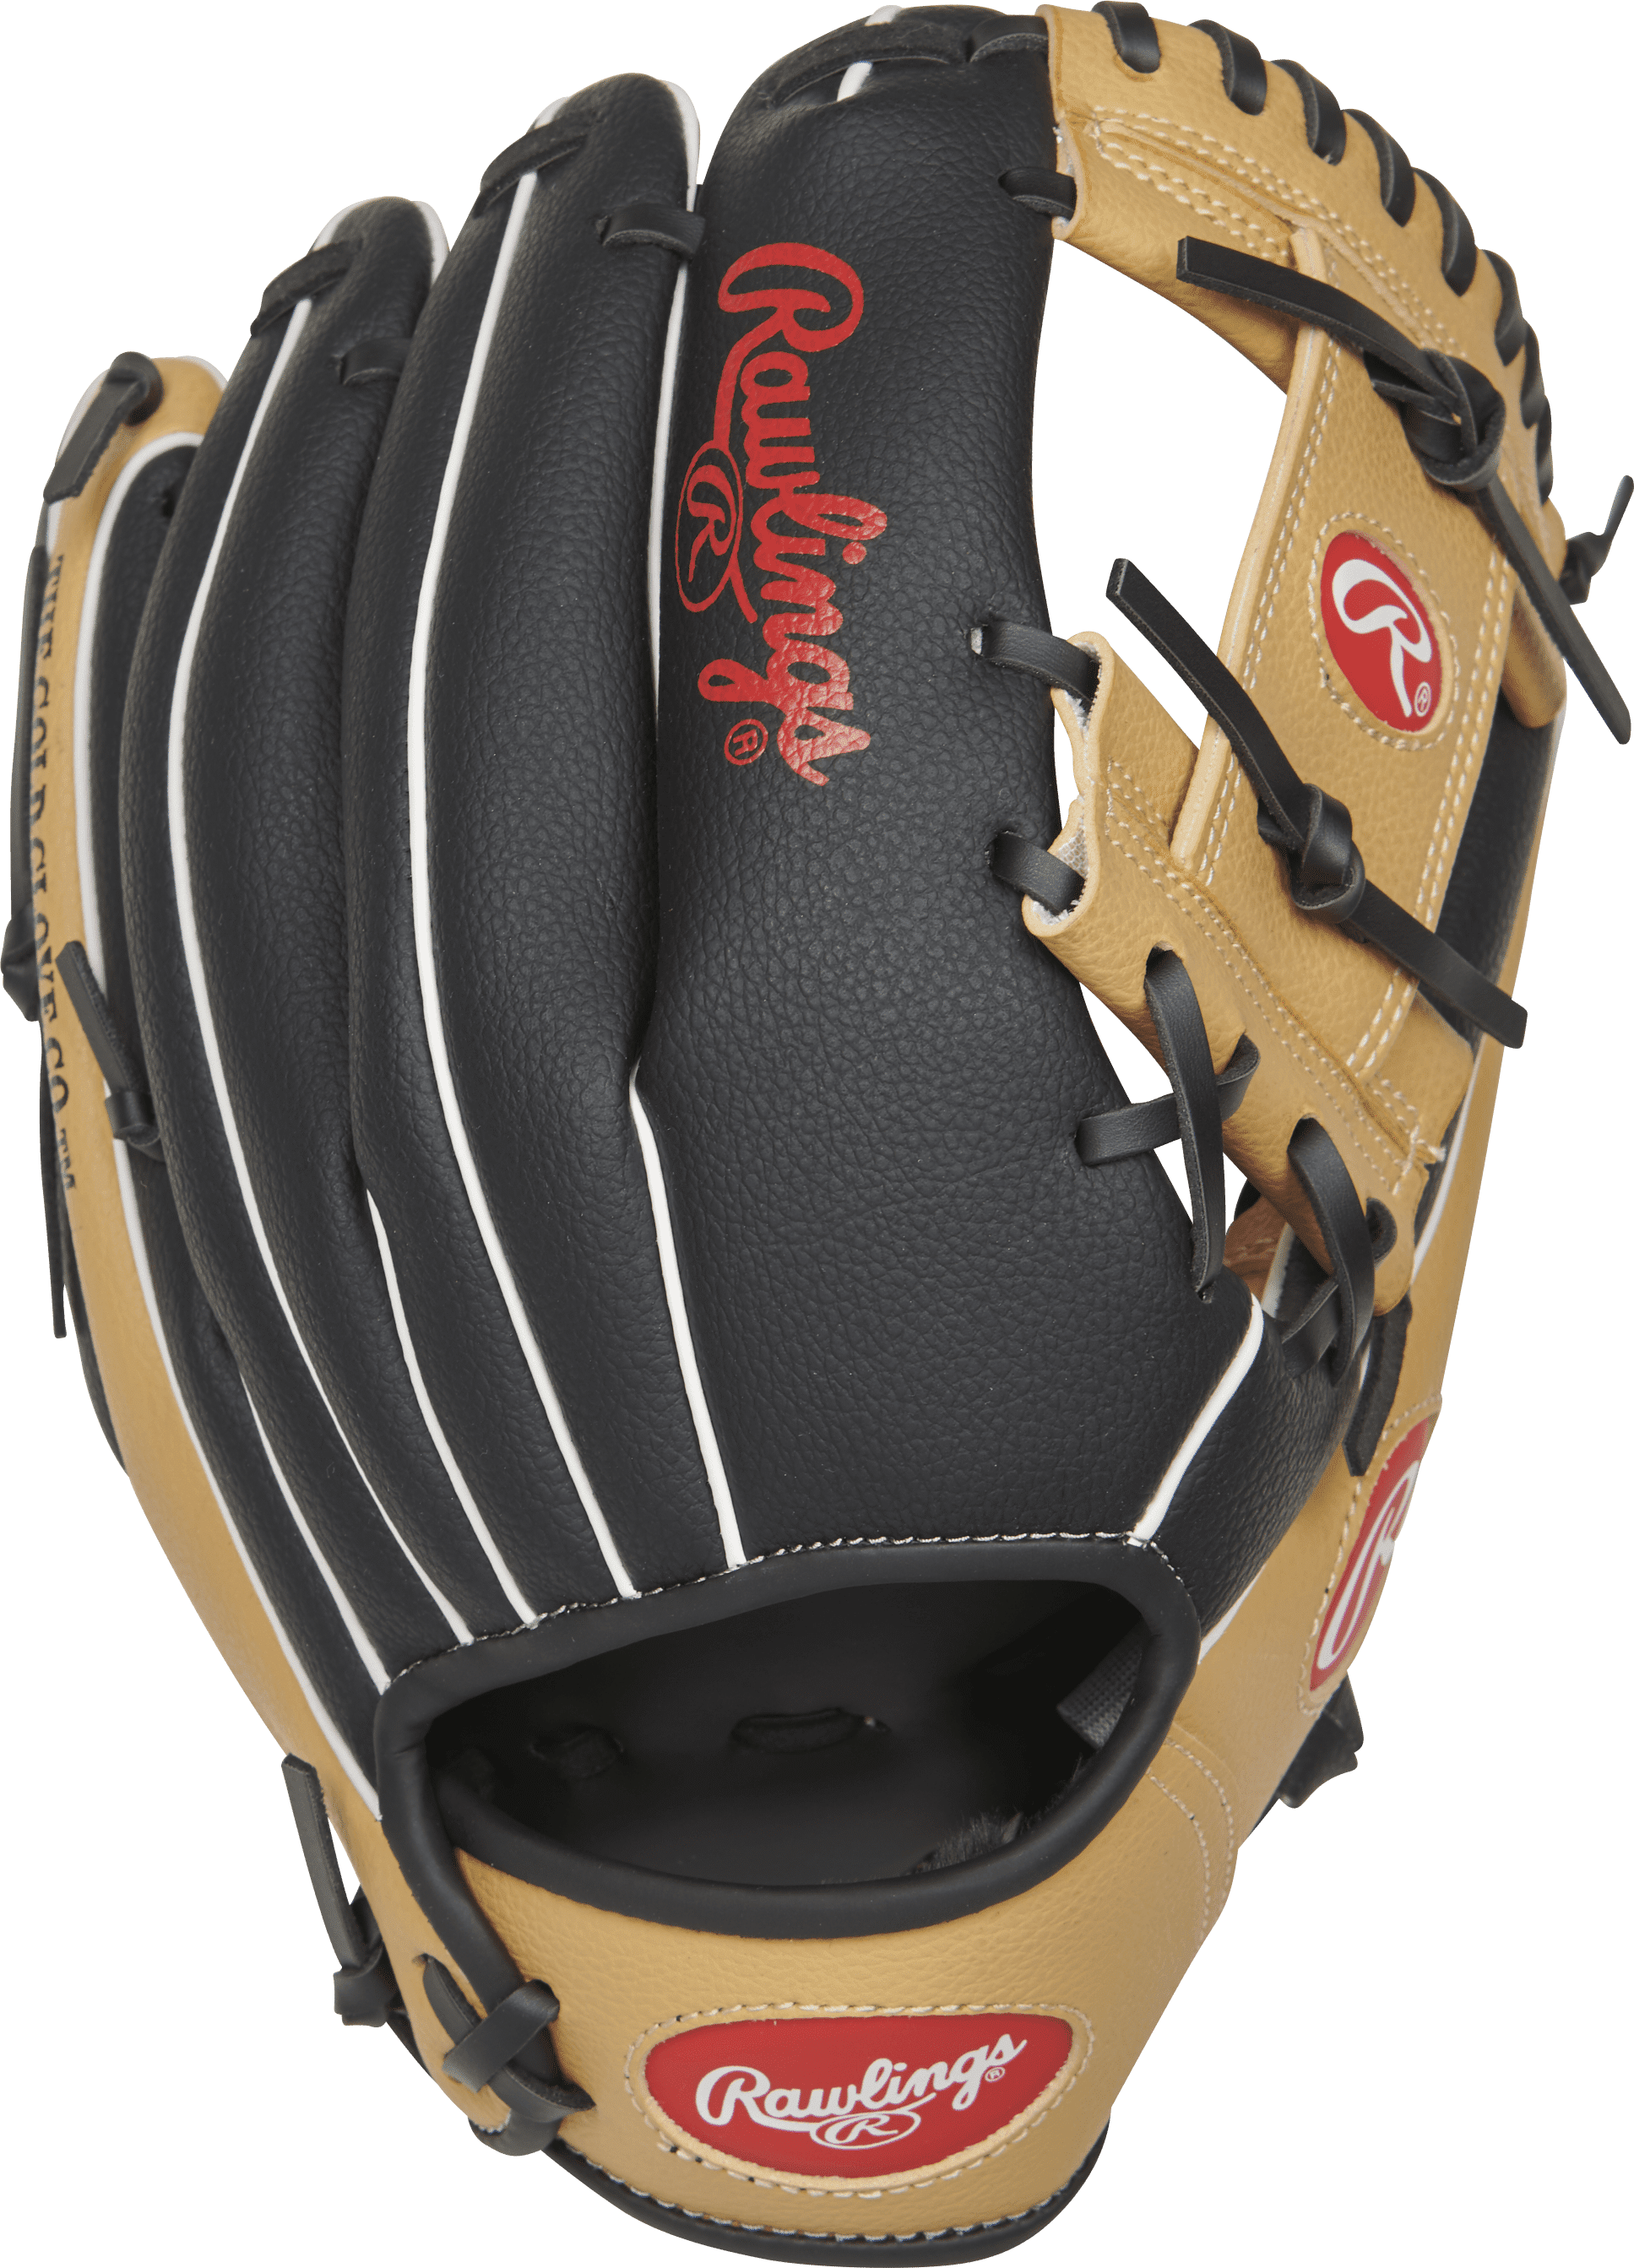 Rawlings Youth Baseball Glove prodige Main Gauche 11" Pitcher/infld No Stock photos 